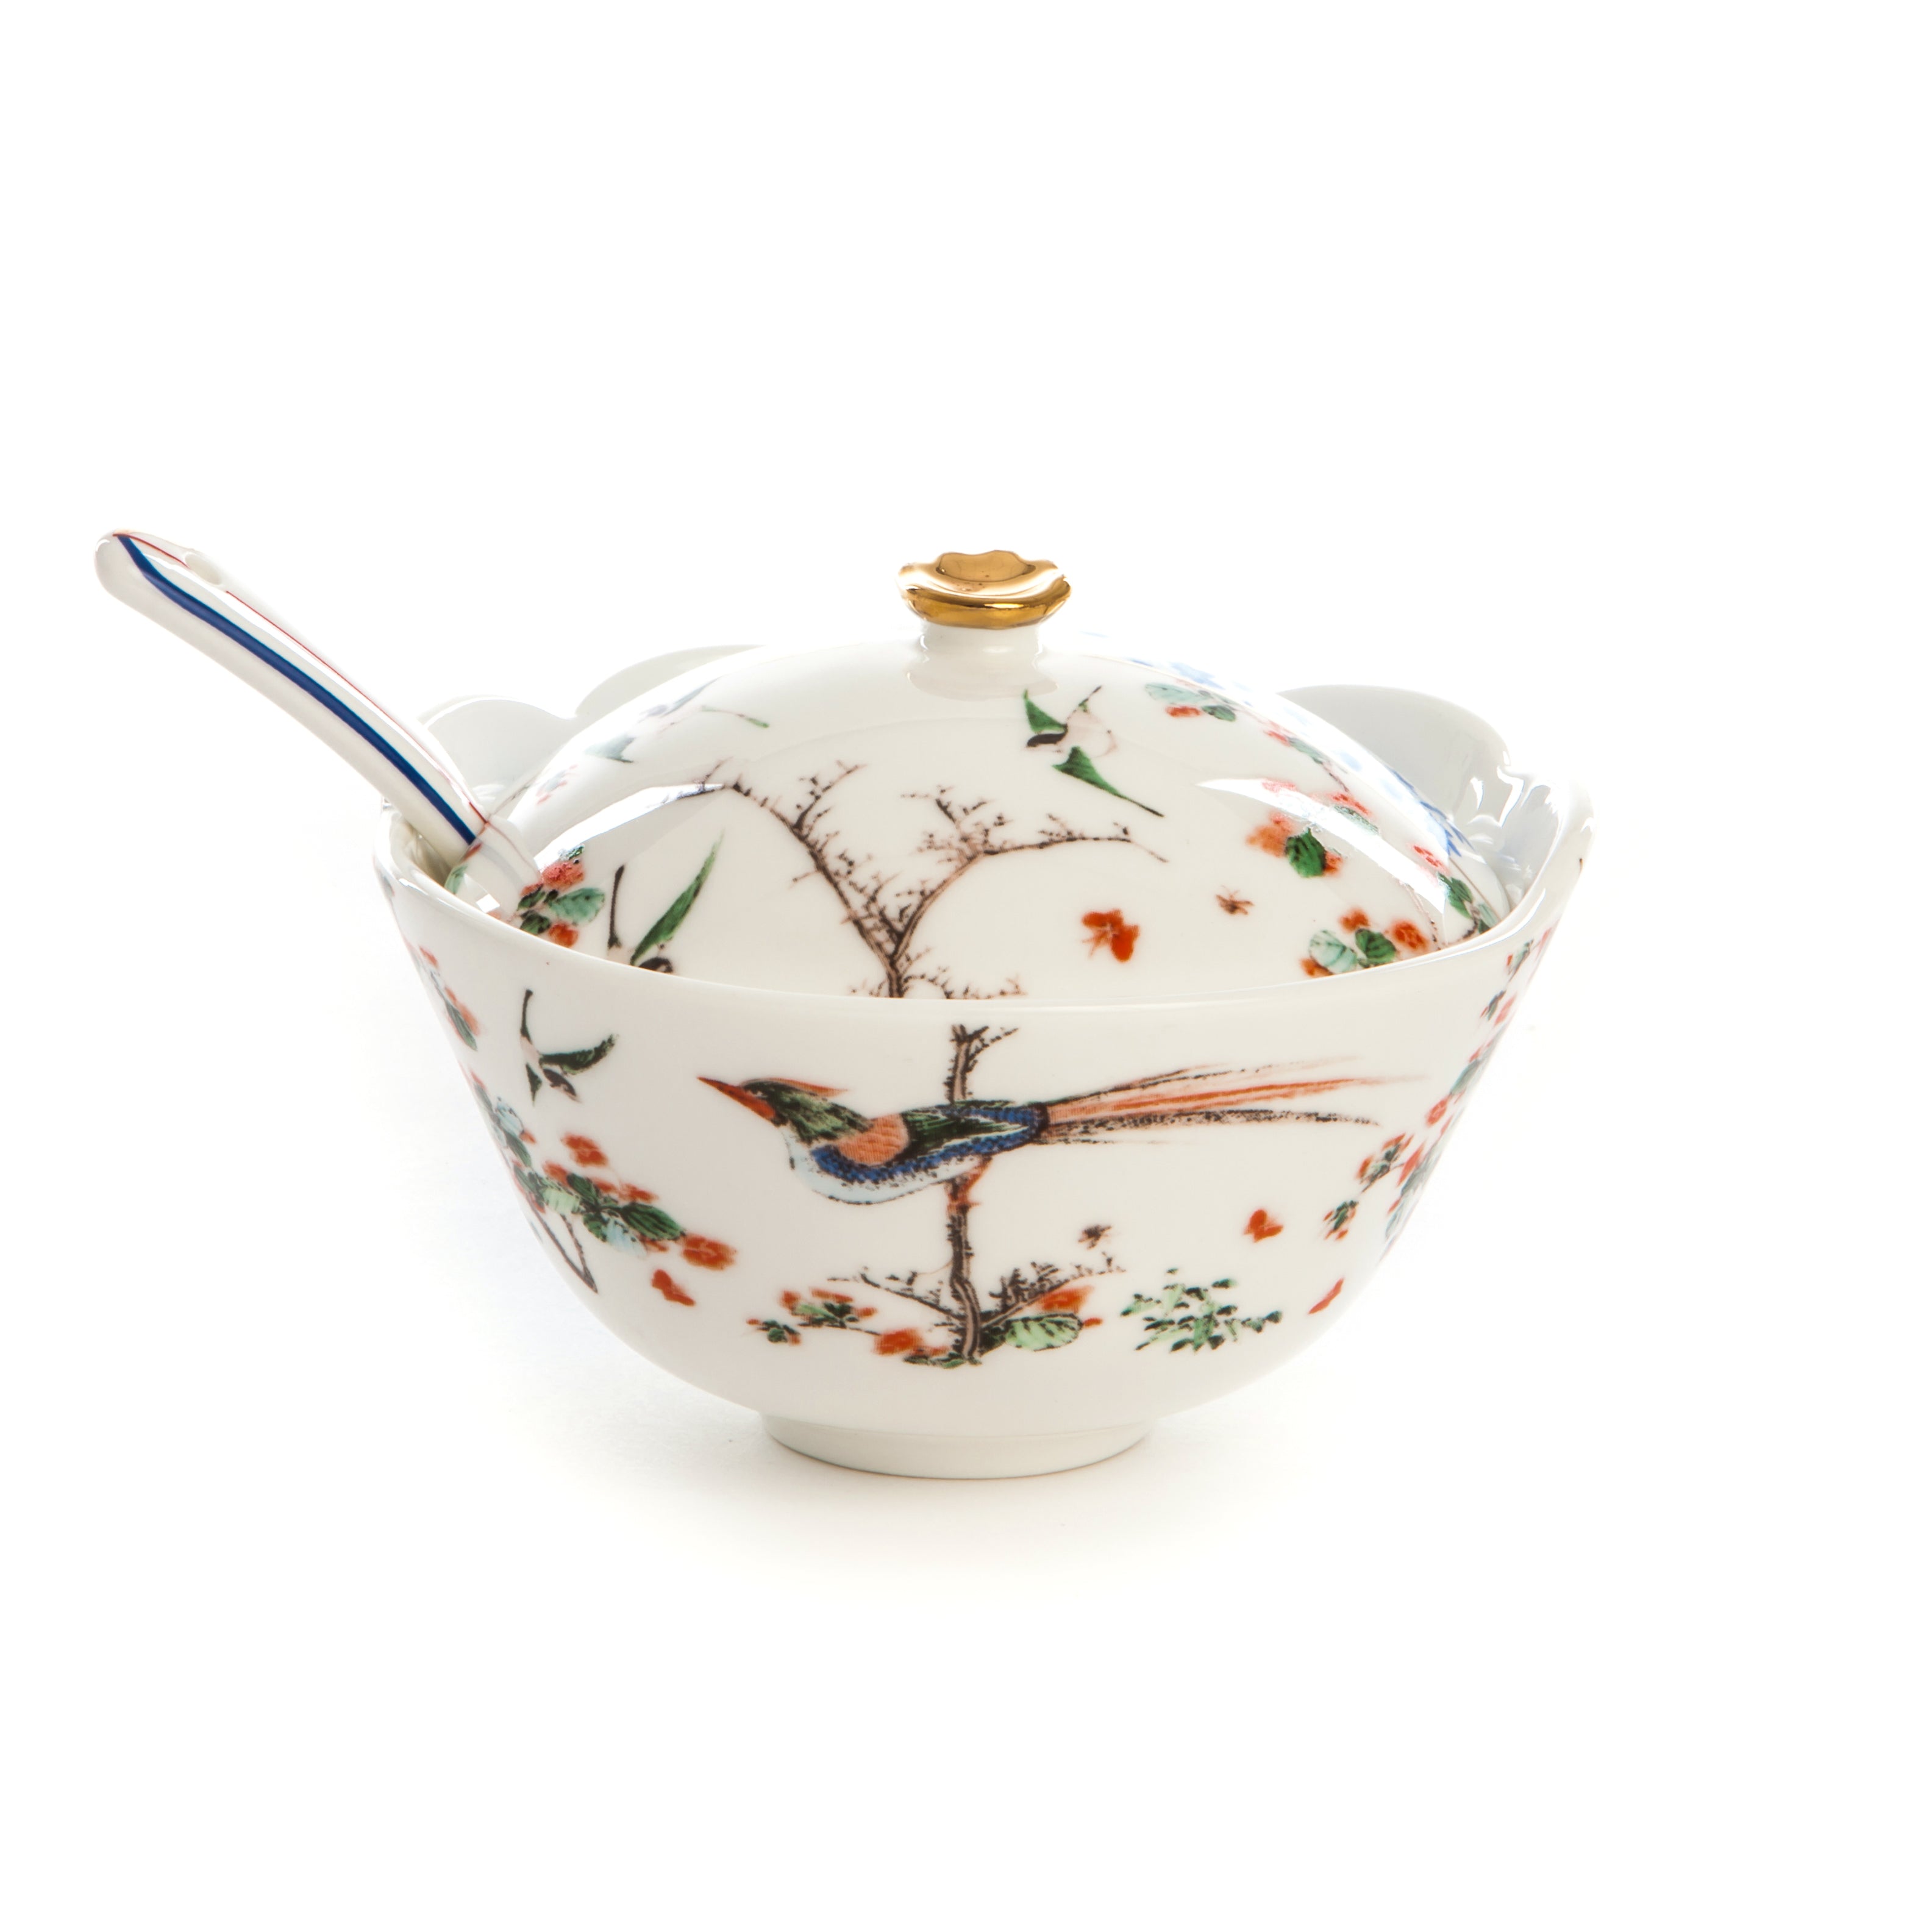 Seletti Hybrid Maurilia Porcelain sugar bowl with spoon